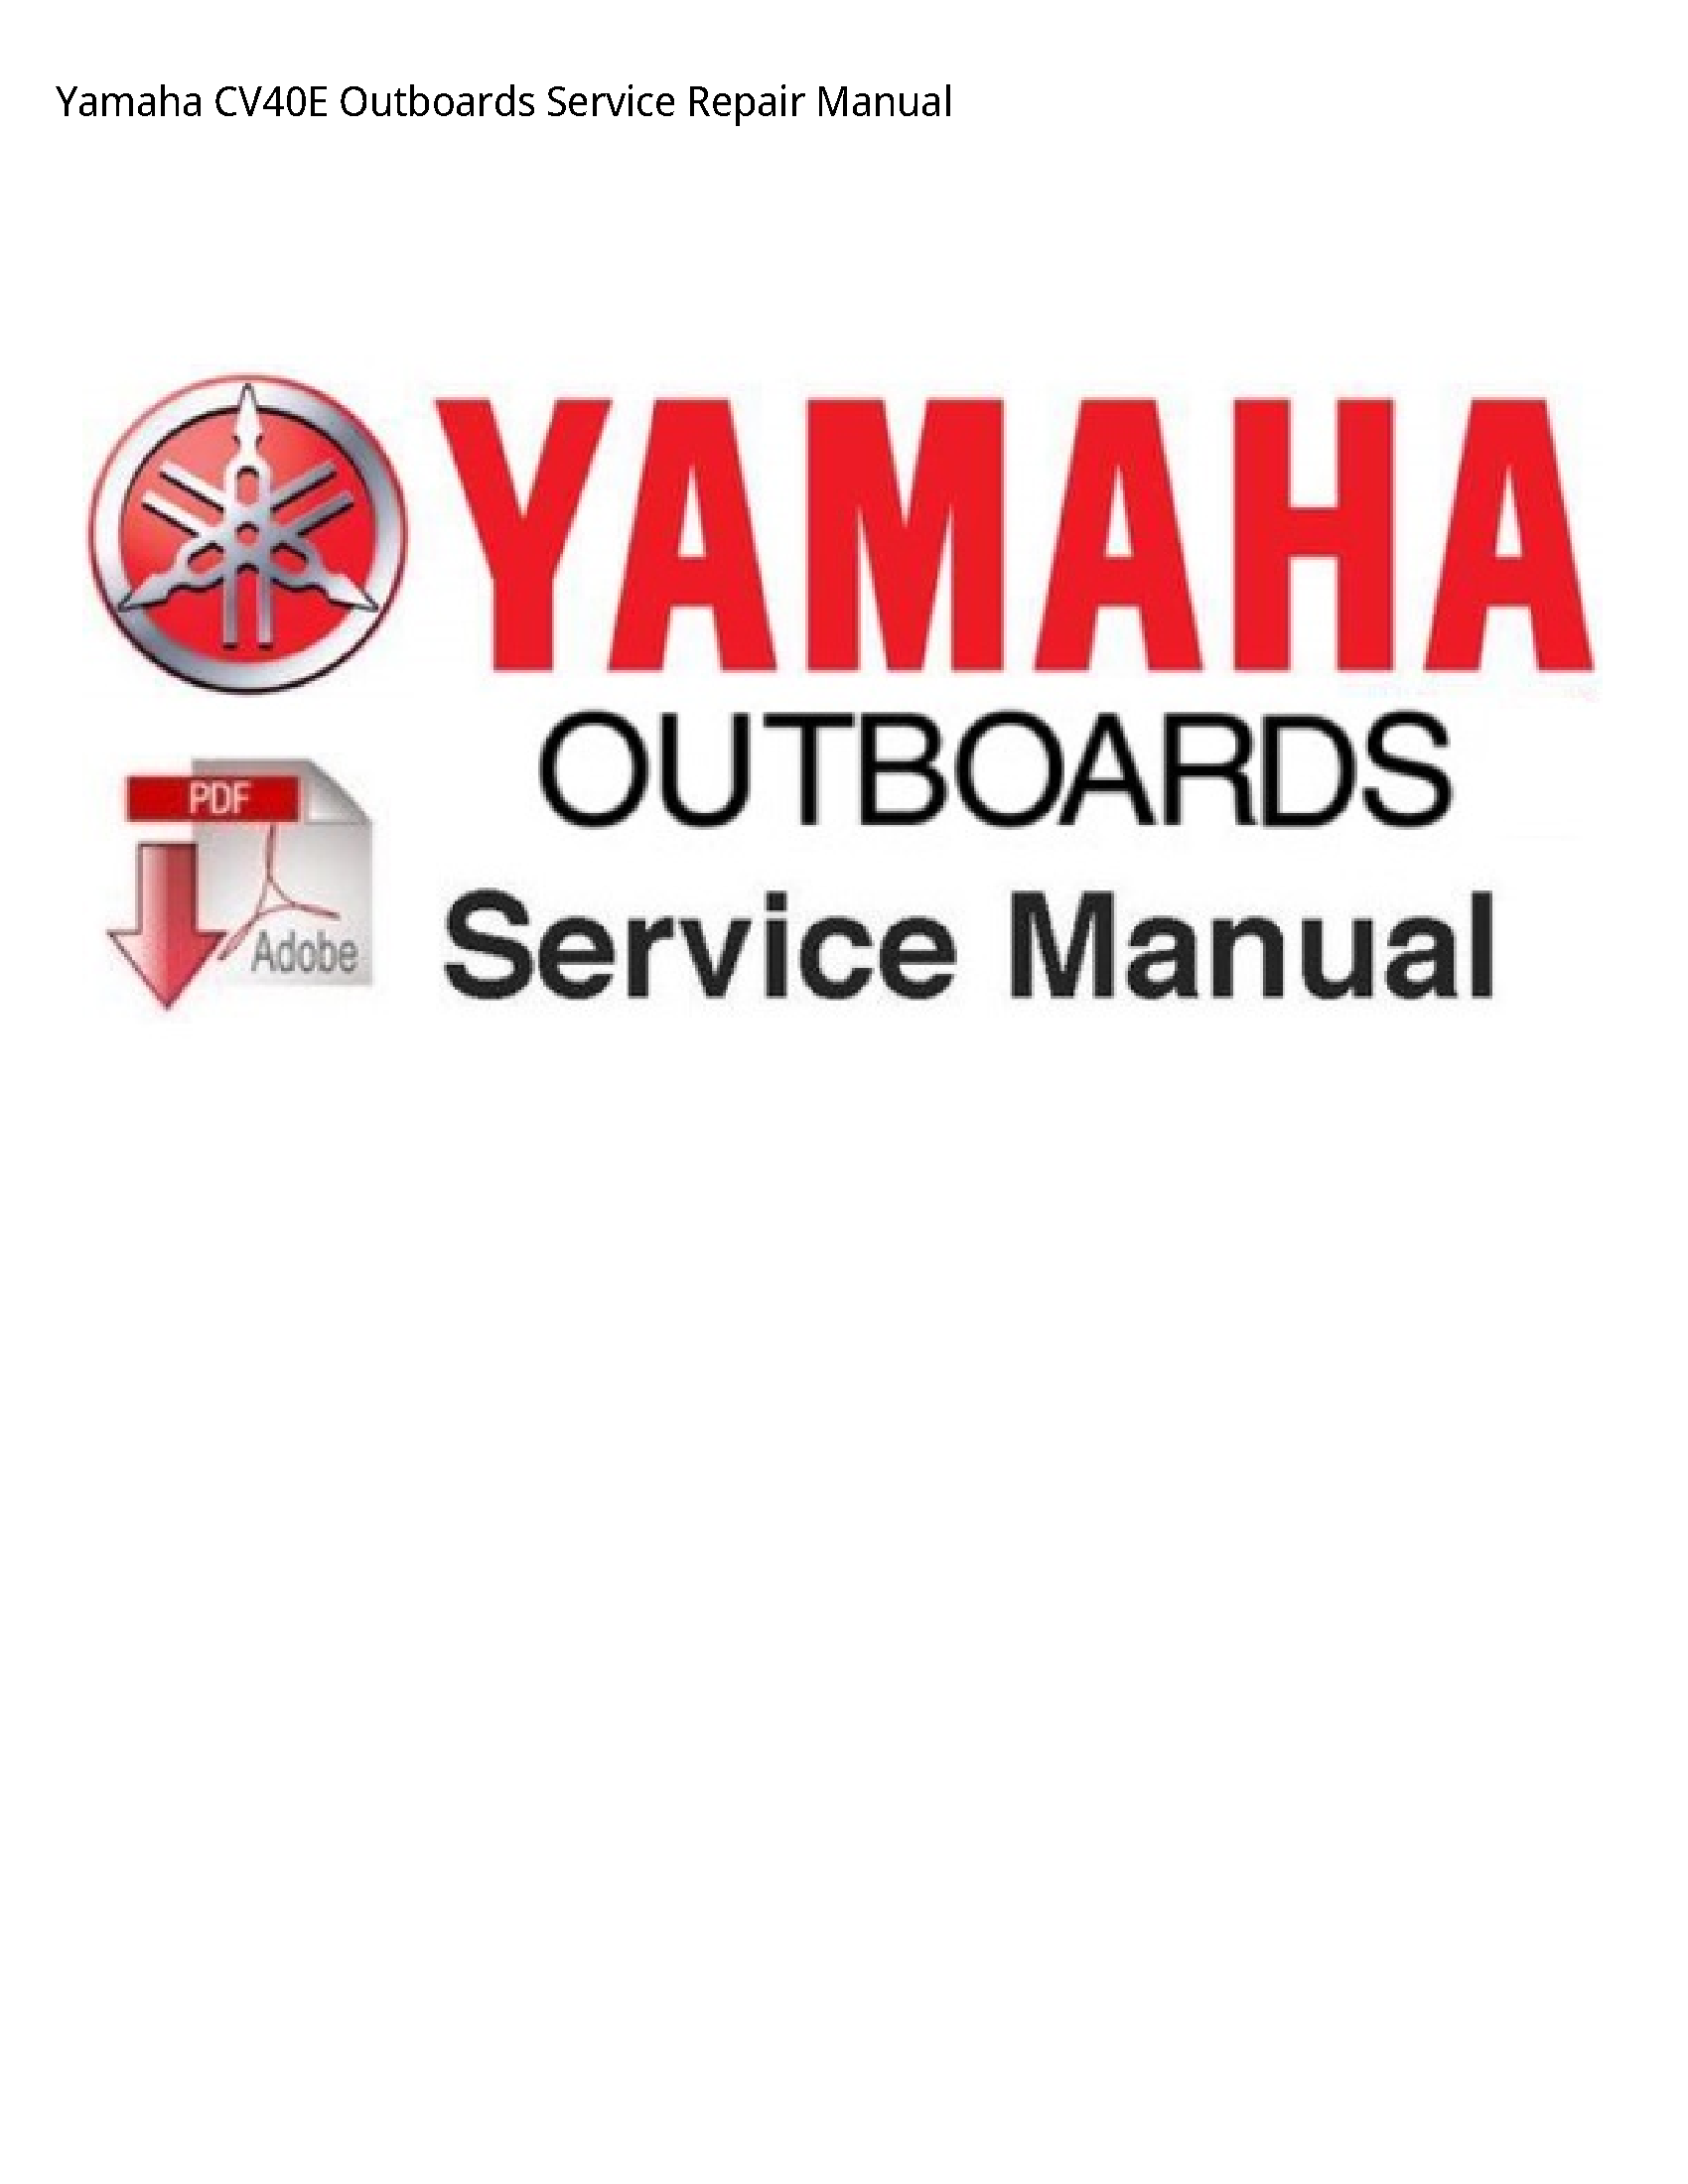 Yamaha CV40E Outboards manual